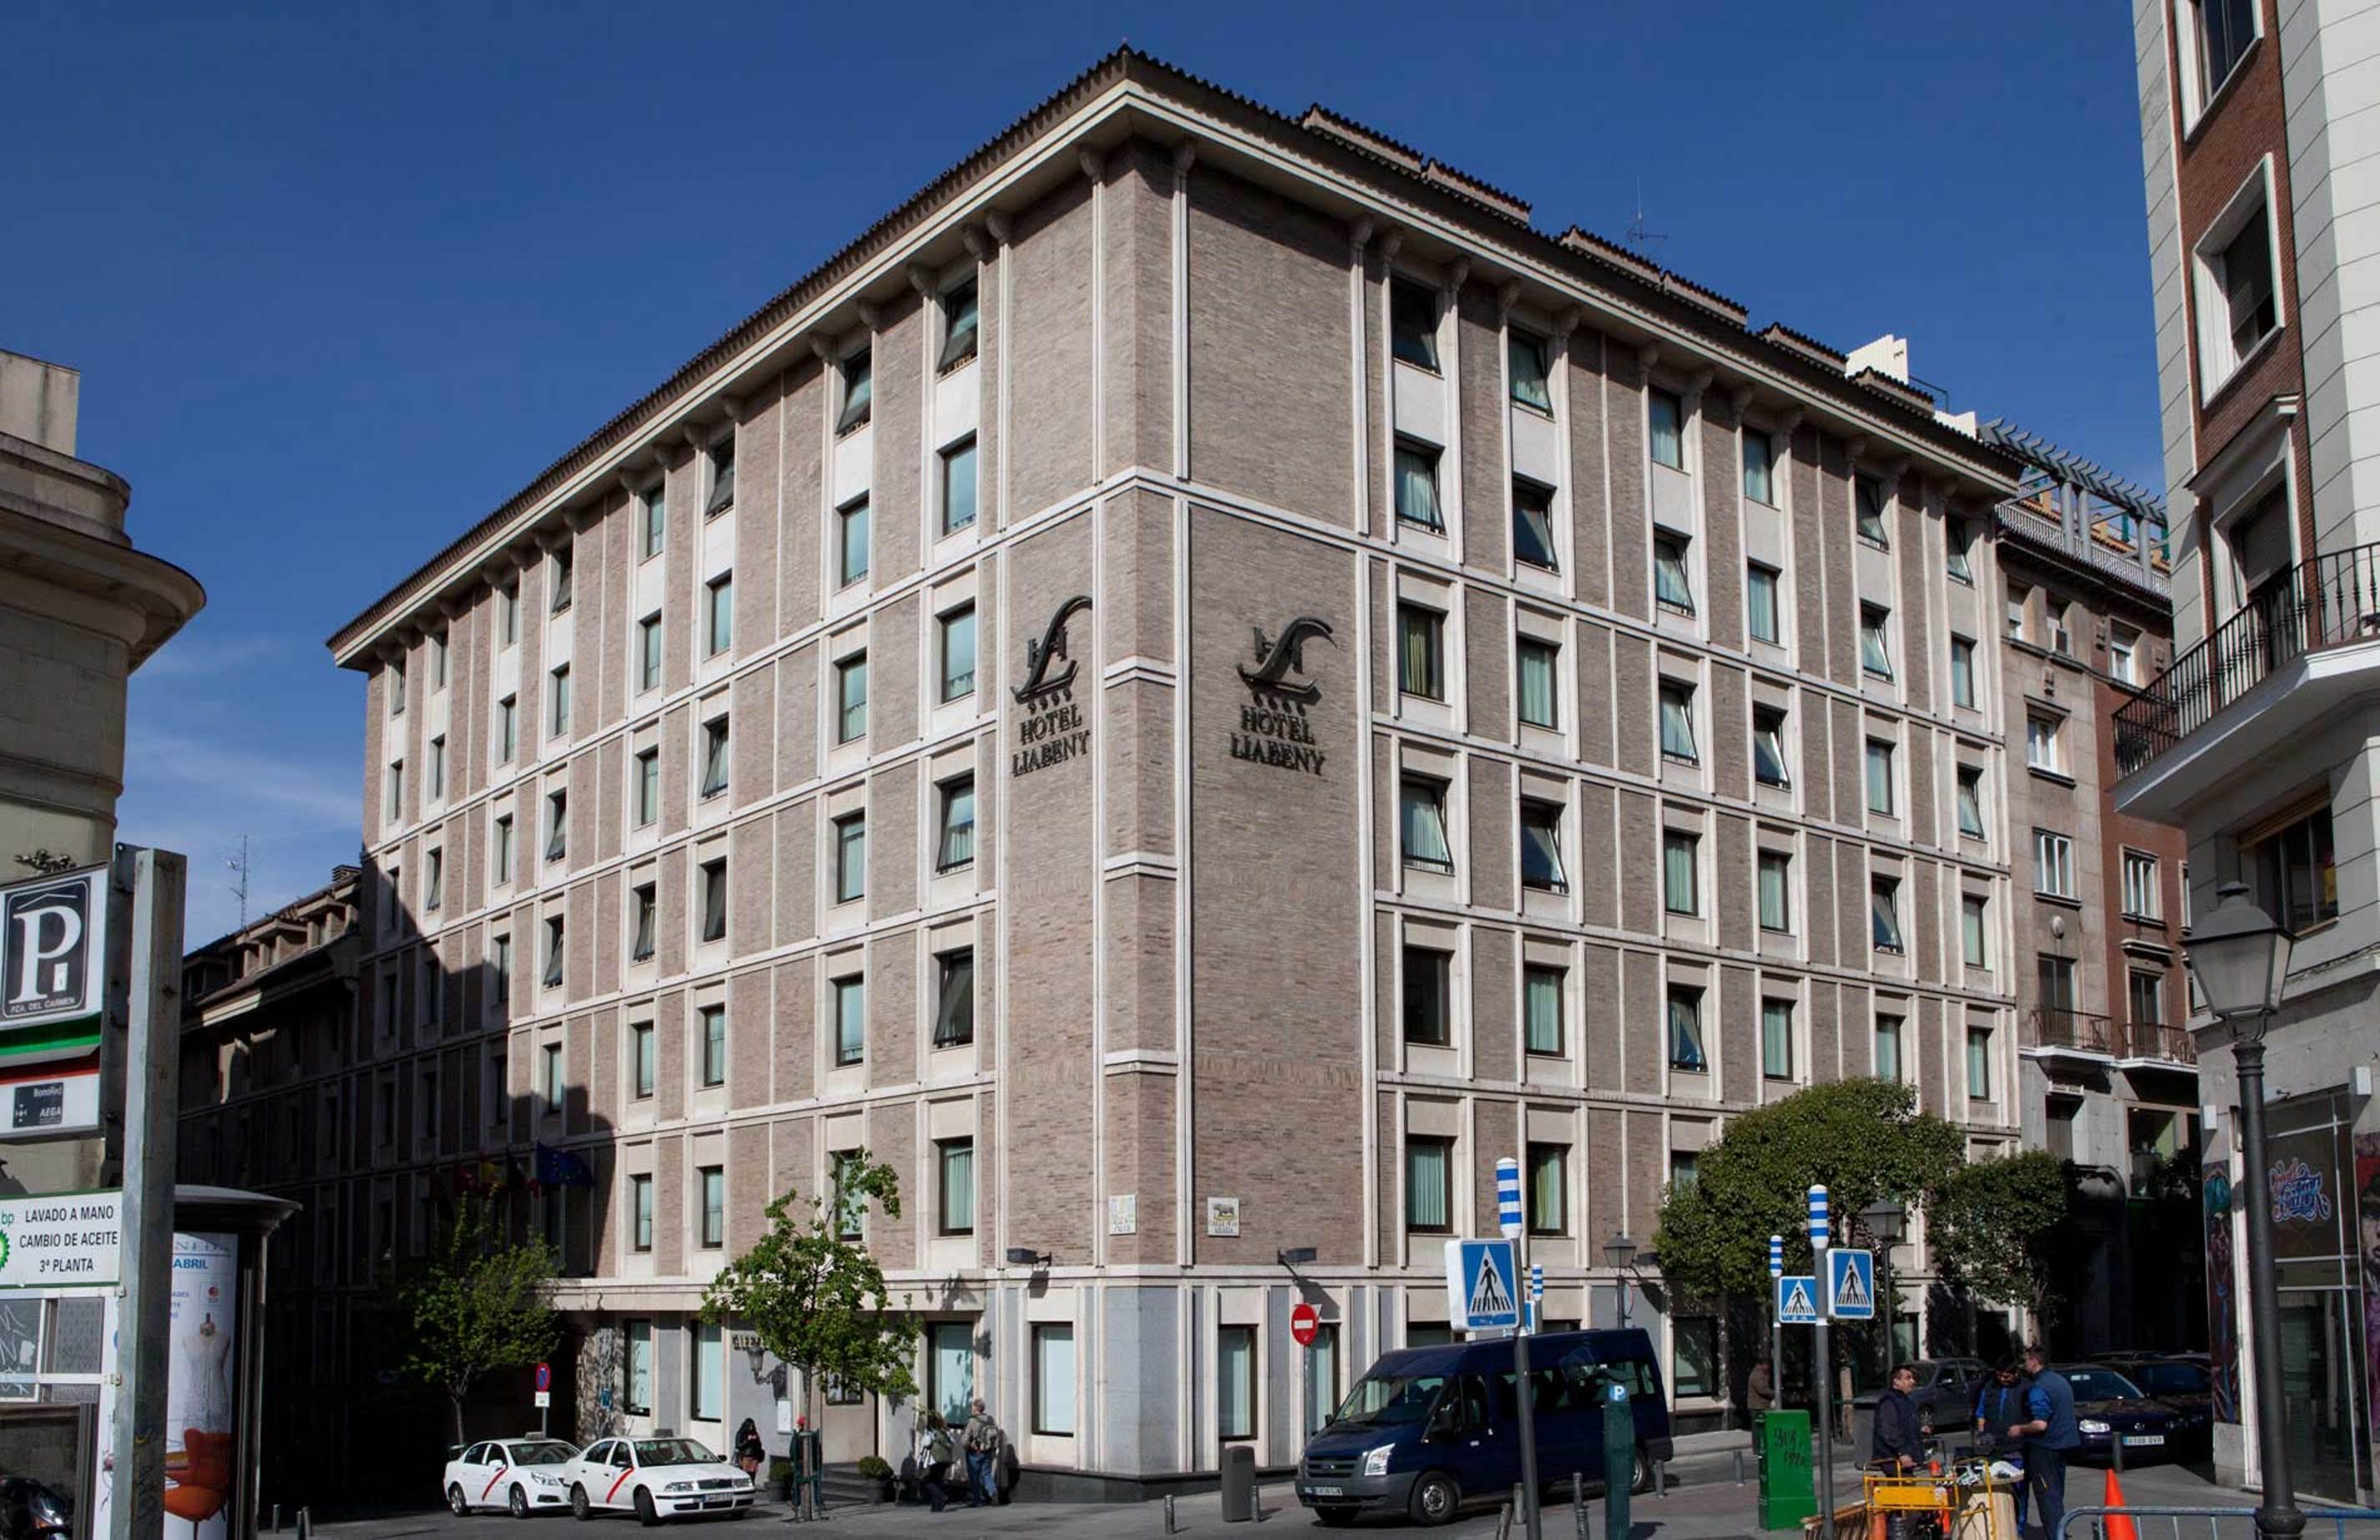 Hotel Liabeny Madrid Extérieur photo